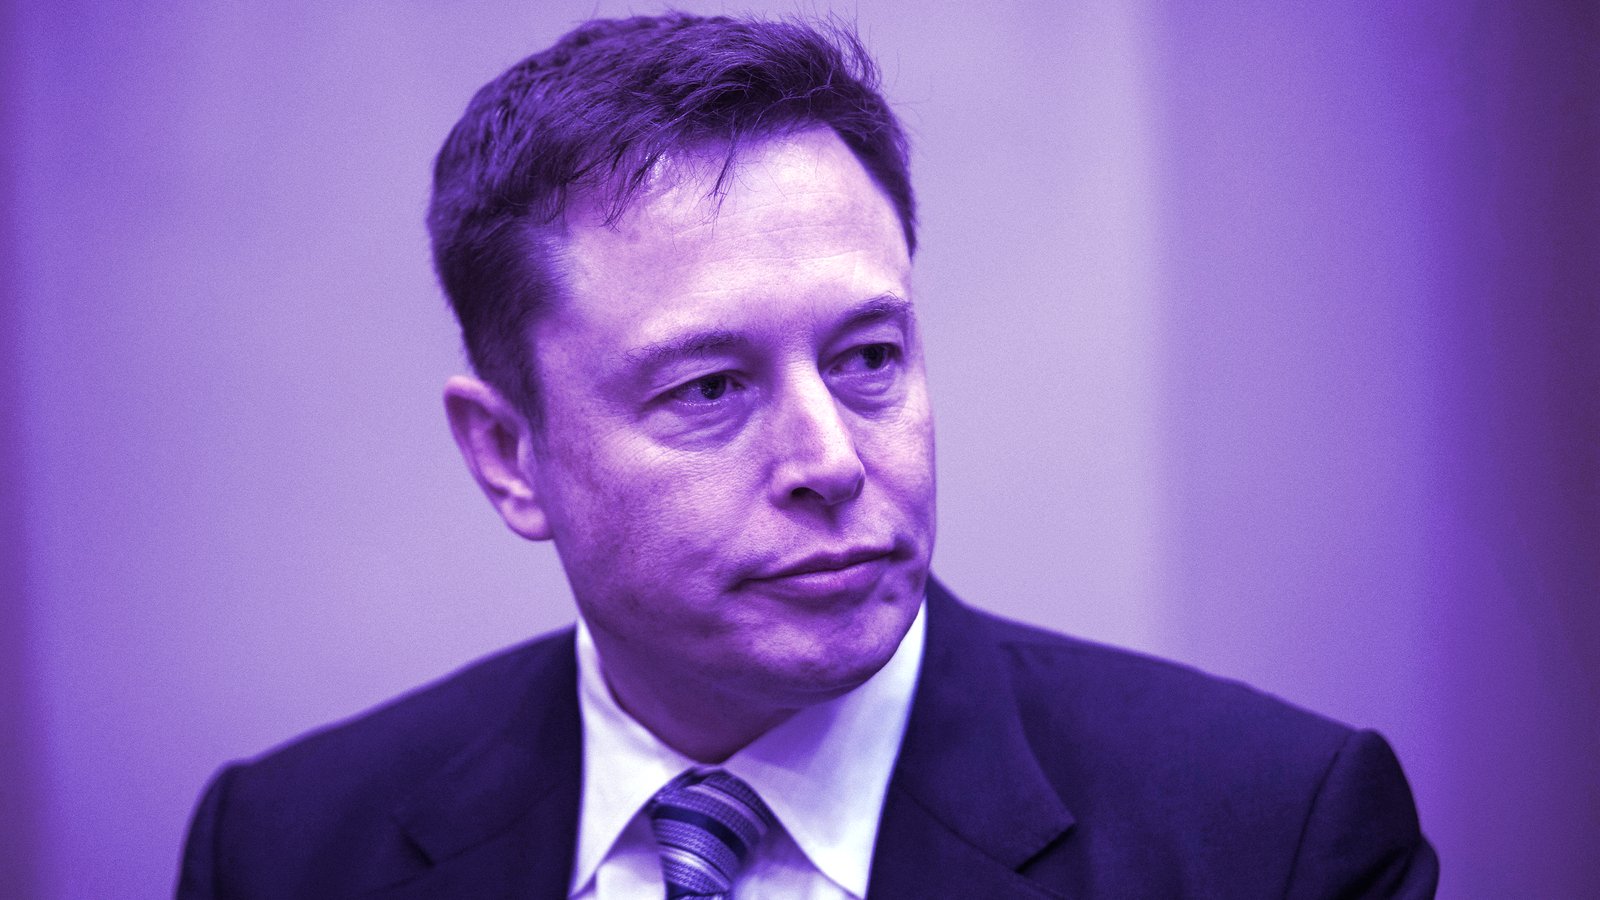 Elon Musk's Bitcoin Bet Could Cost Tesla $100 Million